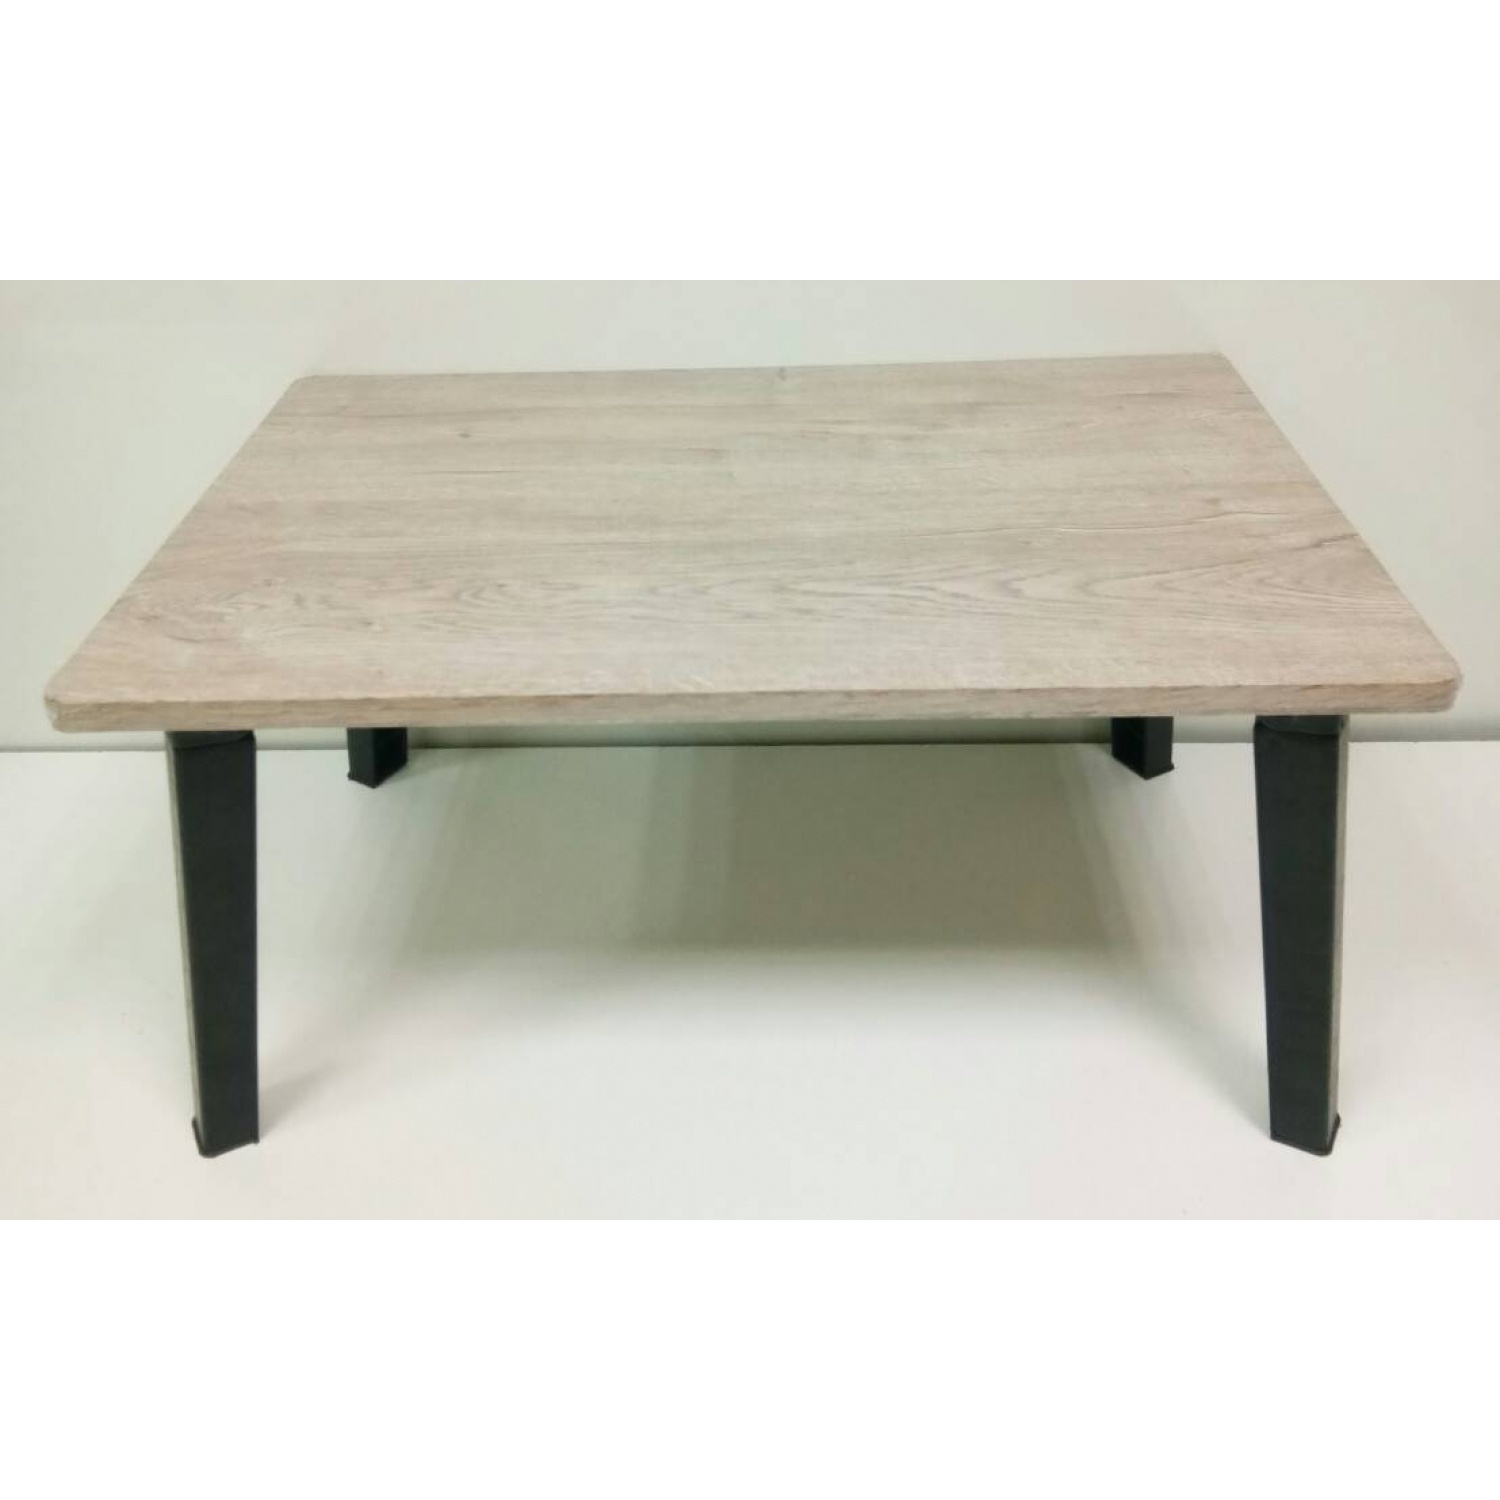 NOBURU โต๊ะญี่ปุ่น 40x60 ซม. ลายคาร์ปูชิโน่